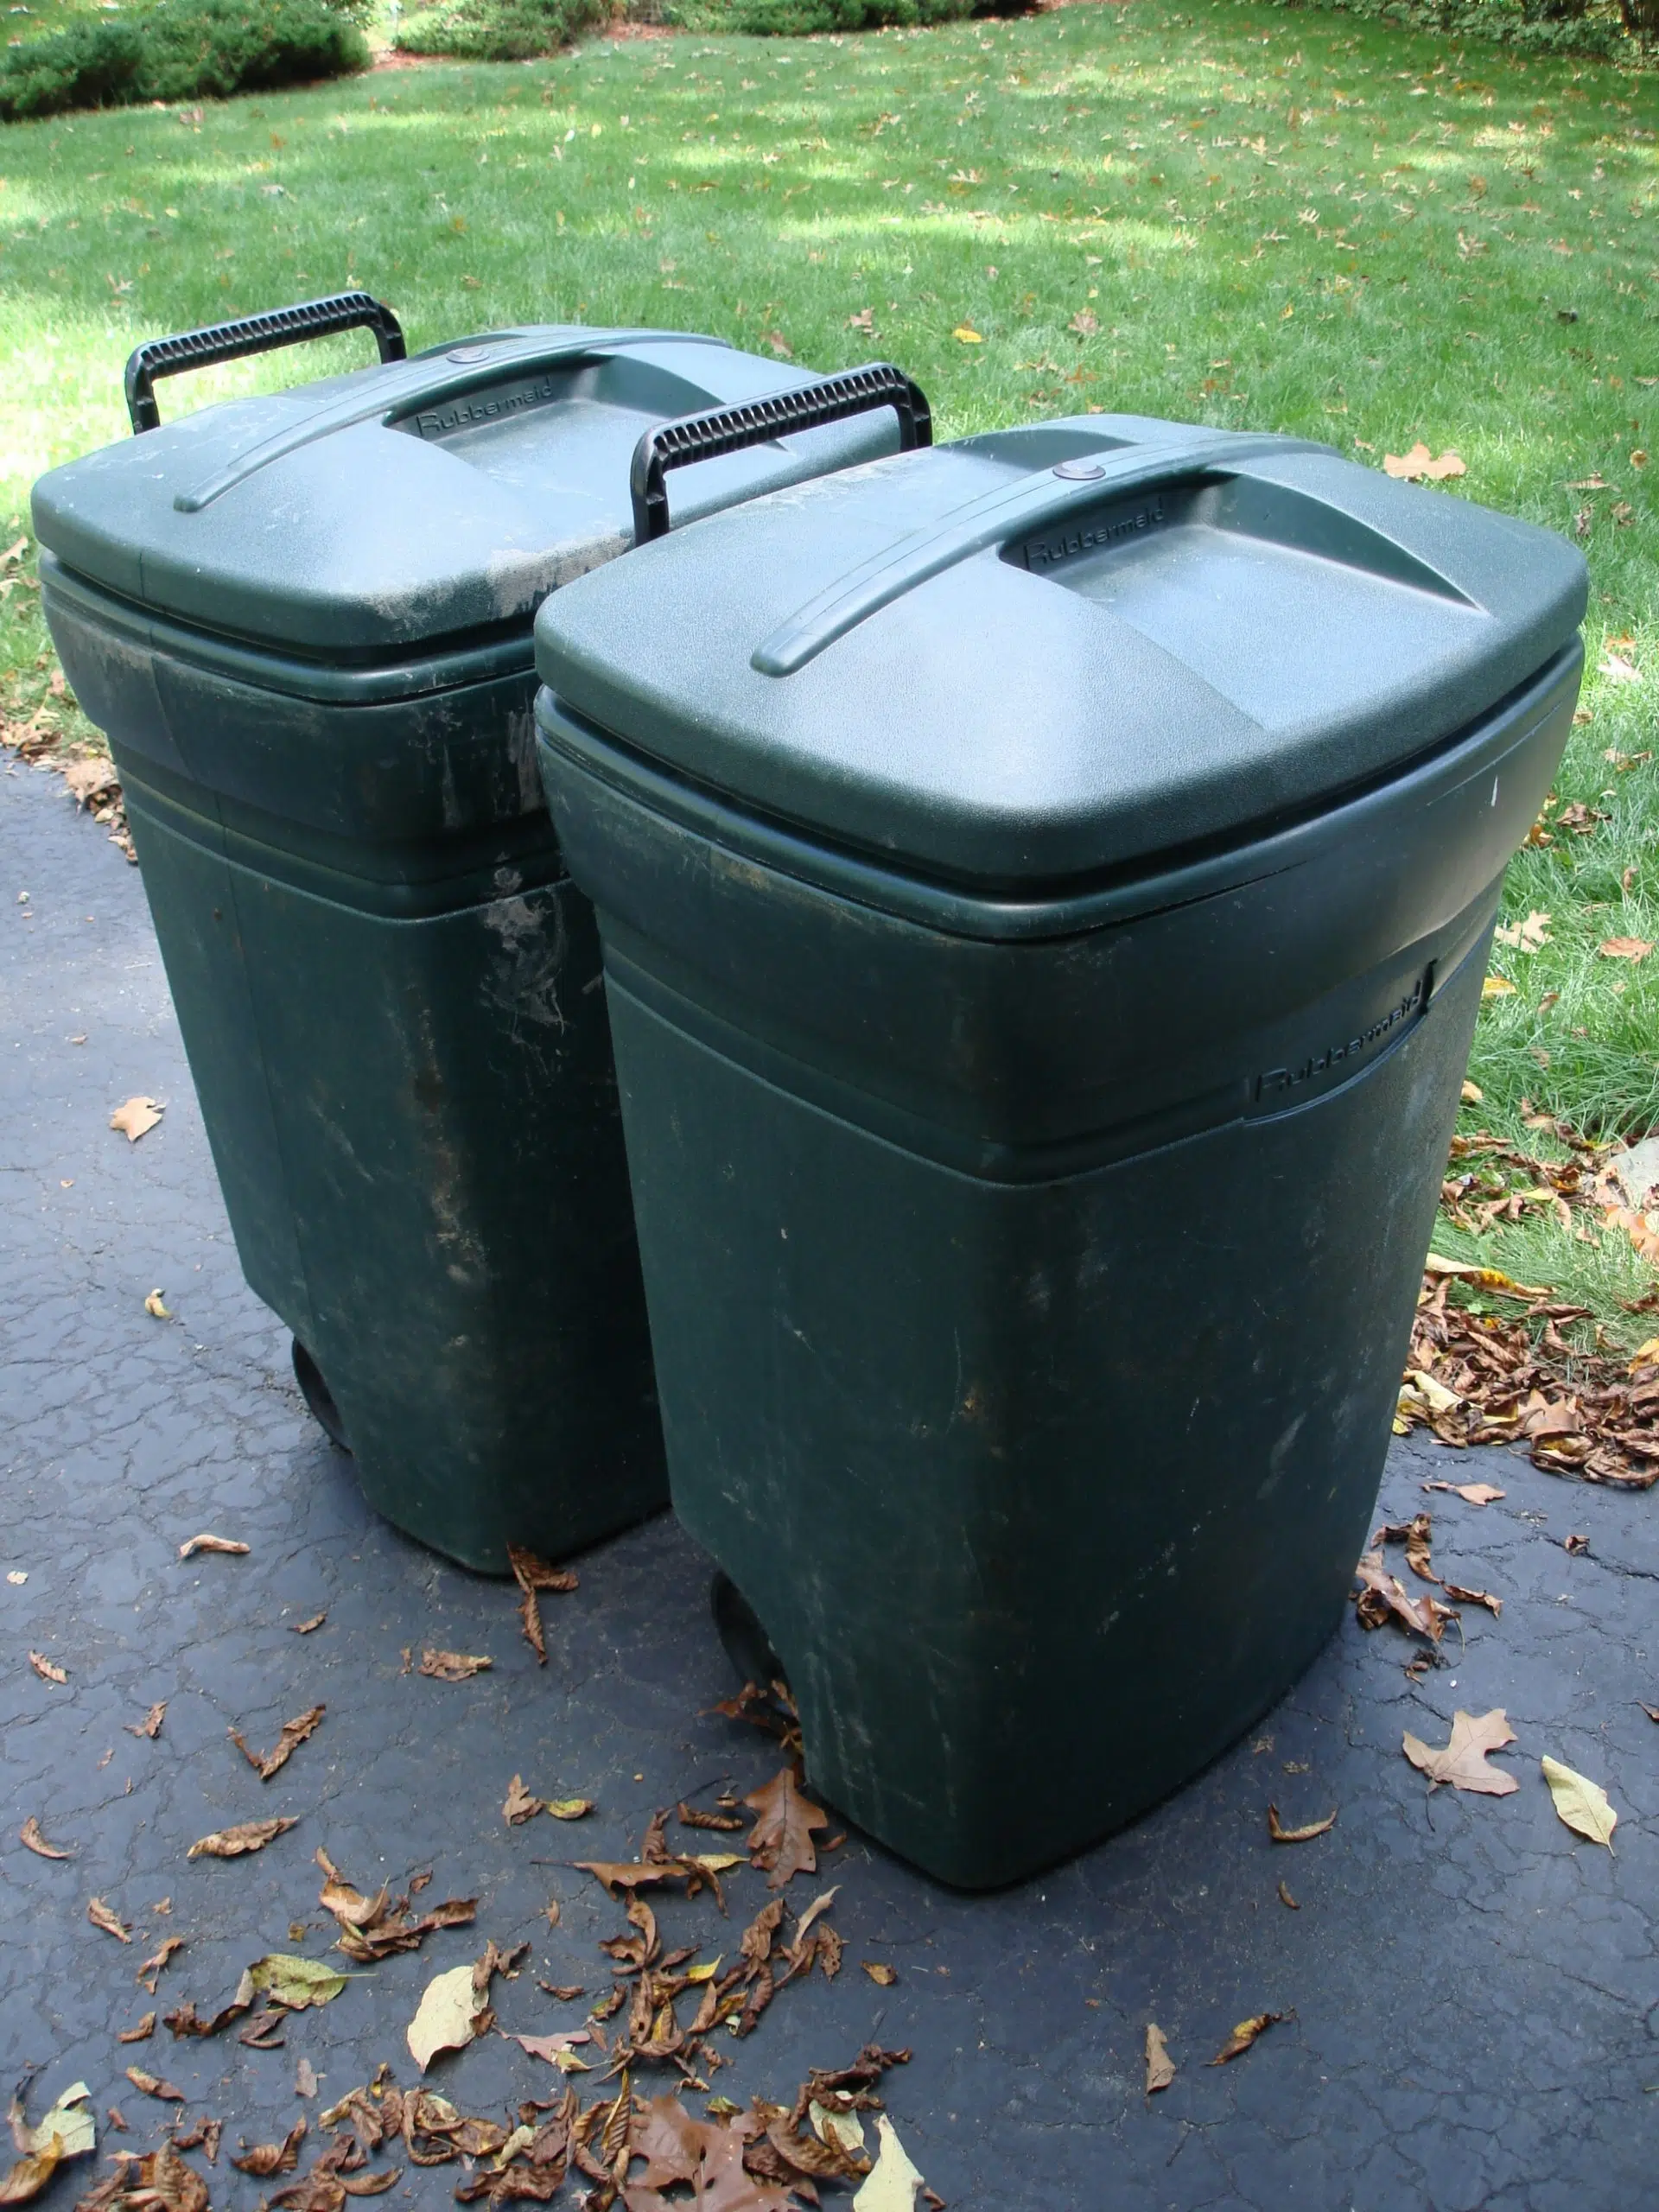 Green bins will soon be in Port Hawkesbury